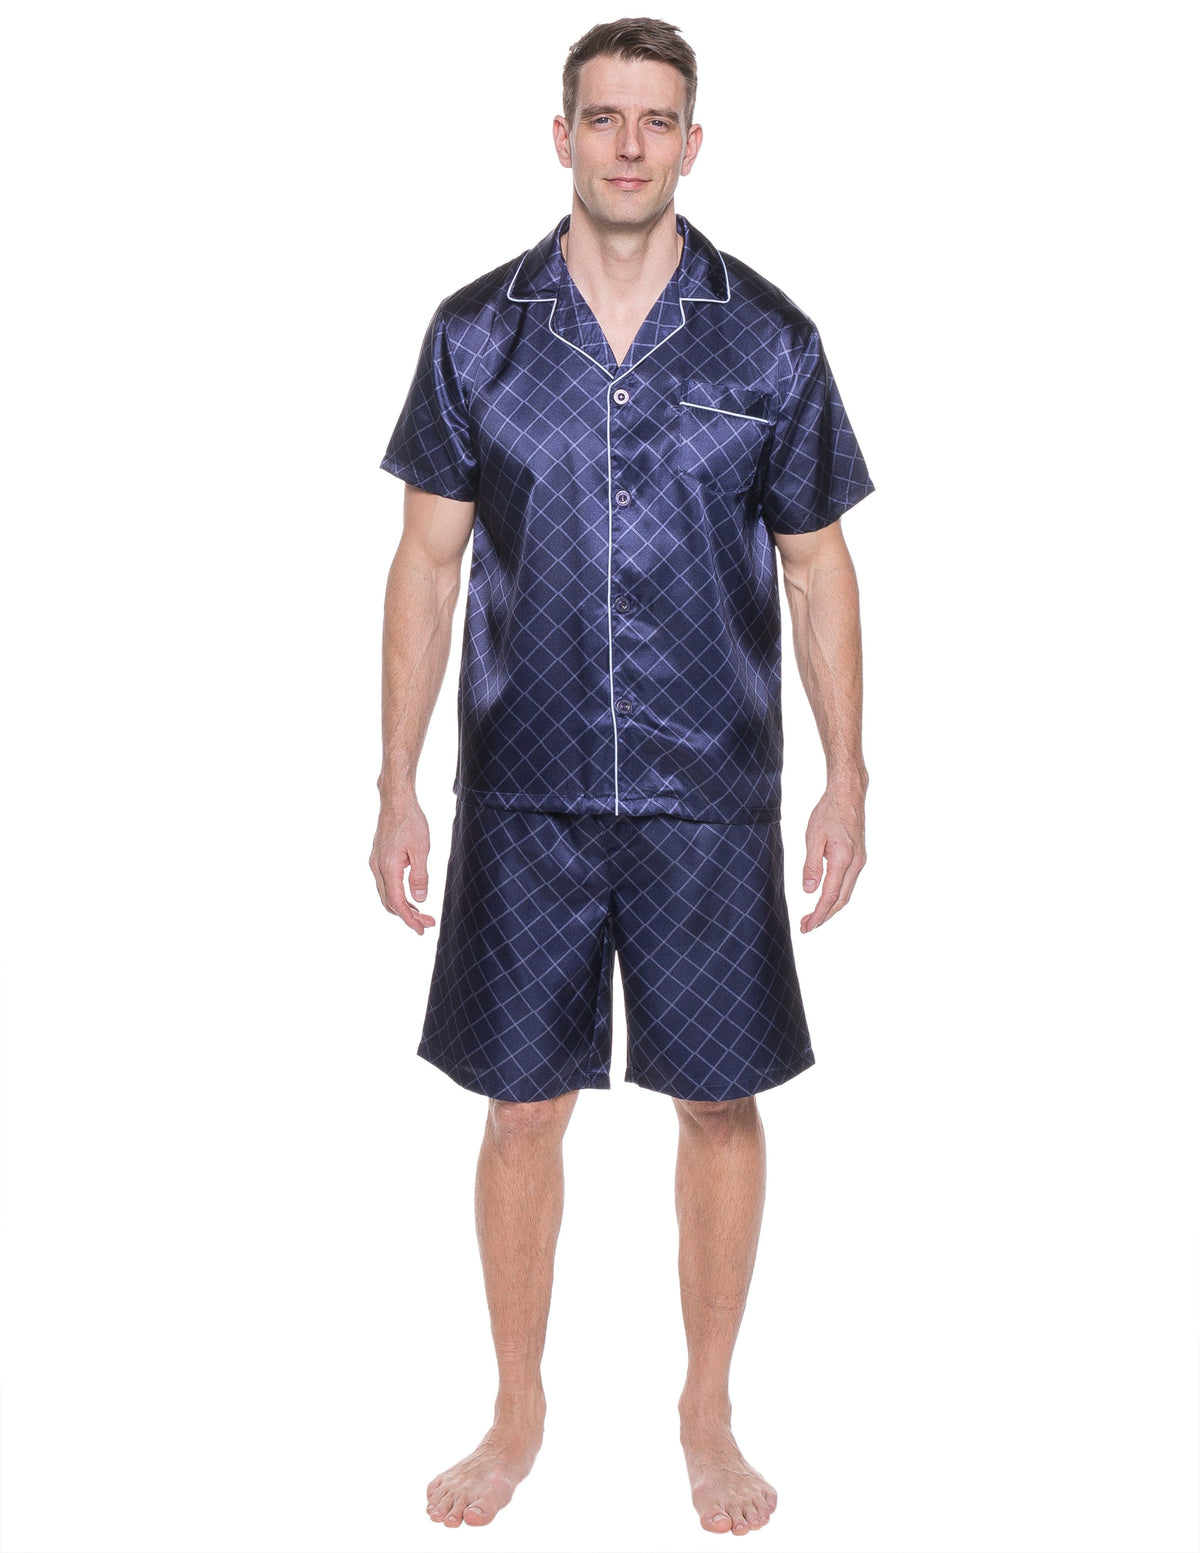 Mens Satin Short Sleepwear/Pajama Set - Diamond Windowpane Navy